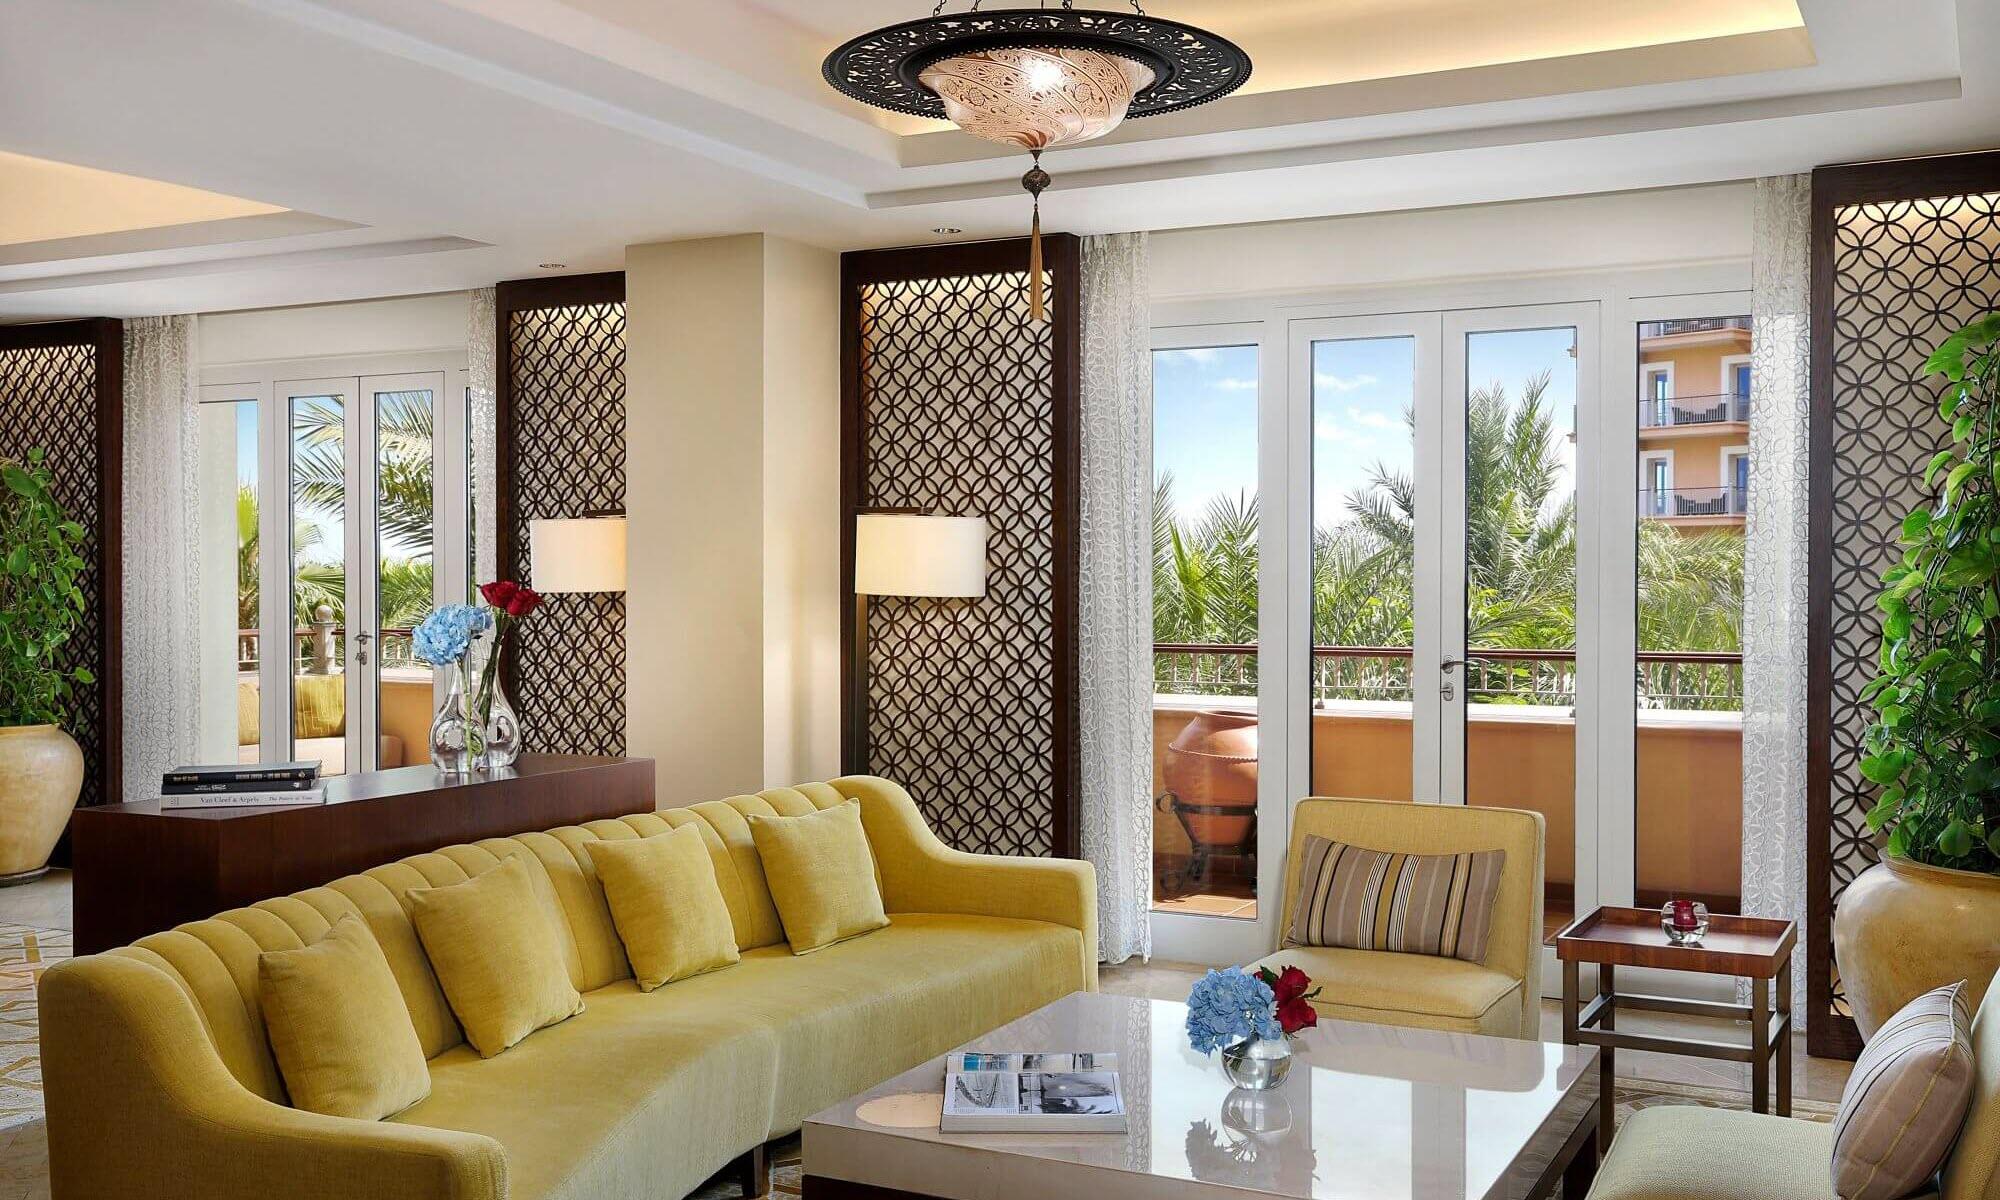 Ritz Carlton Dubai Executive Club Lounge